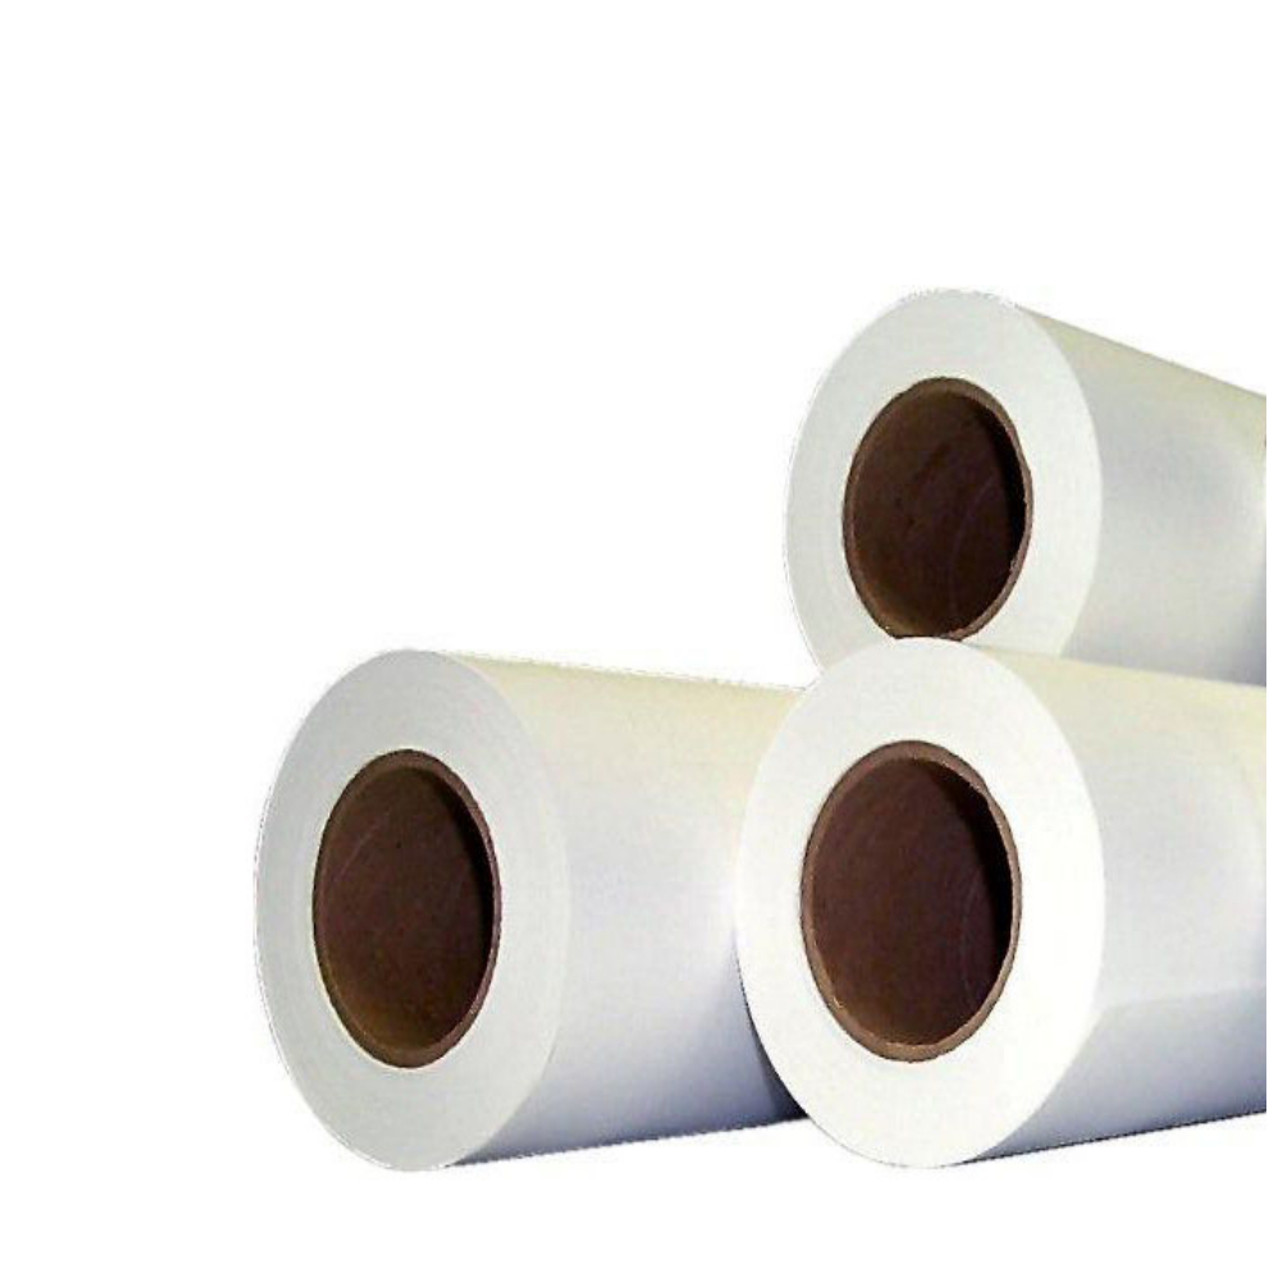 Buffered acid-free paper rolls 110gsm - Perma/Dur® - Preservation Equipment  Ltd